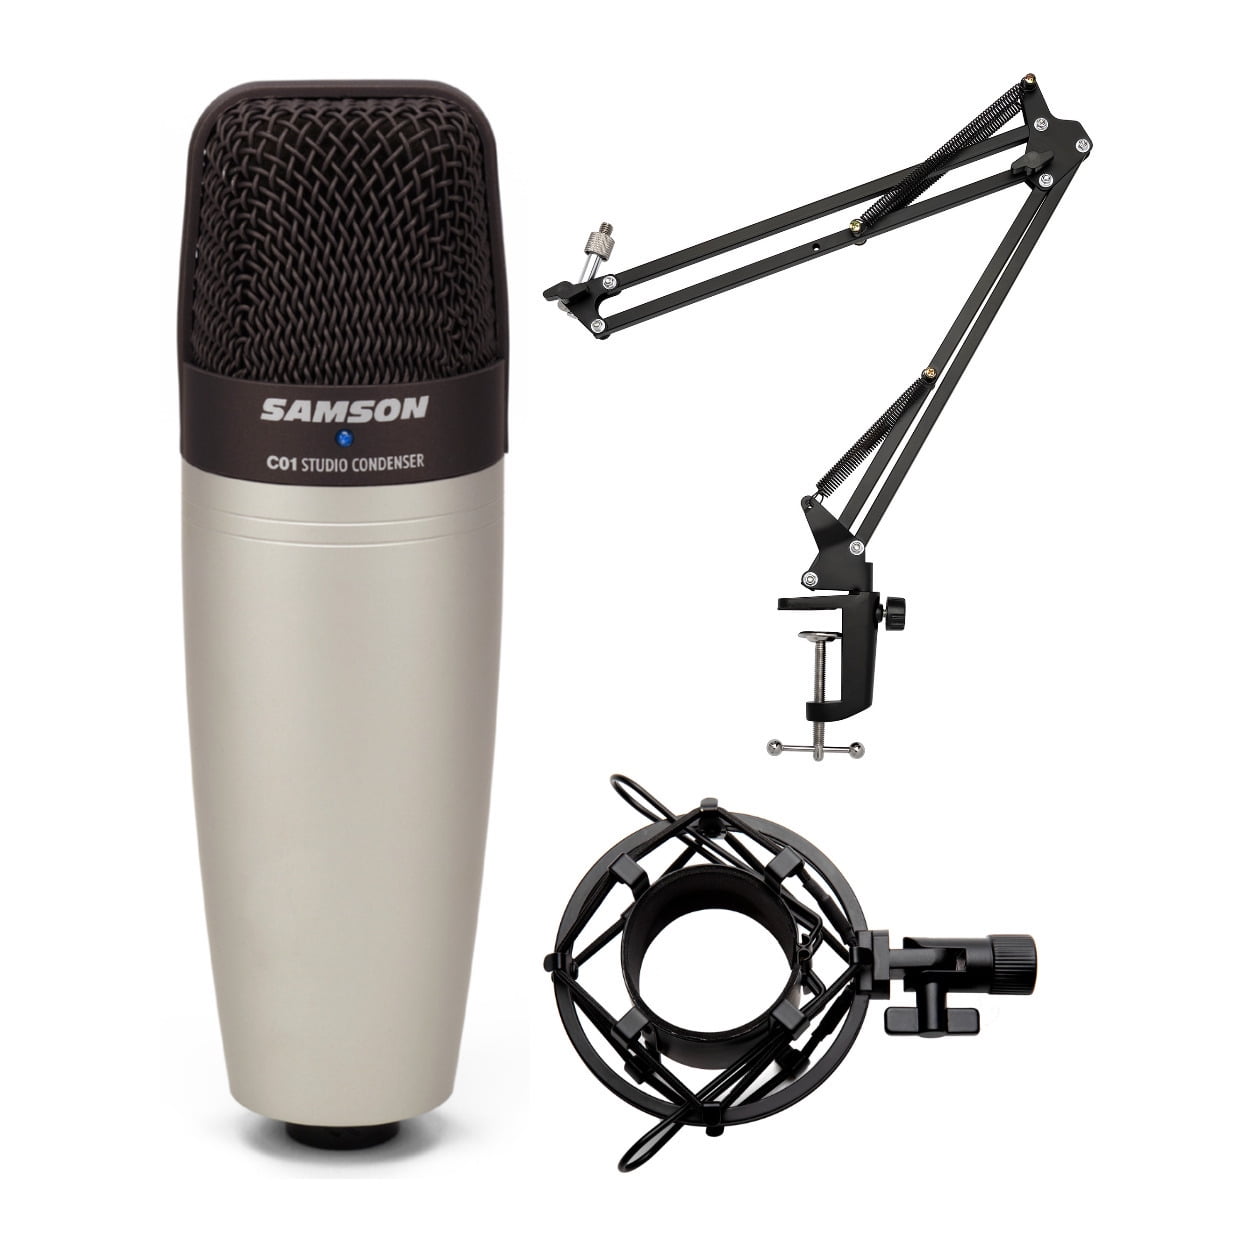 Samson Q2U Microphone Pack Review - All Things Gear